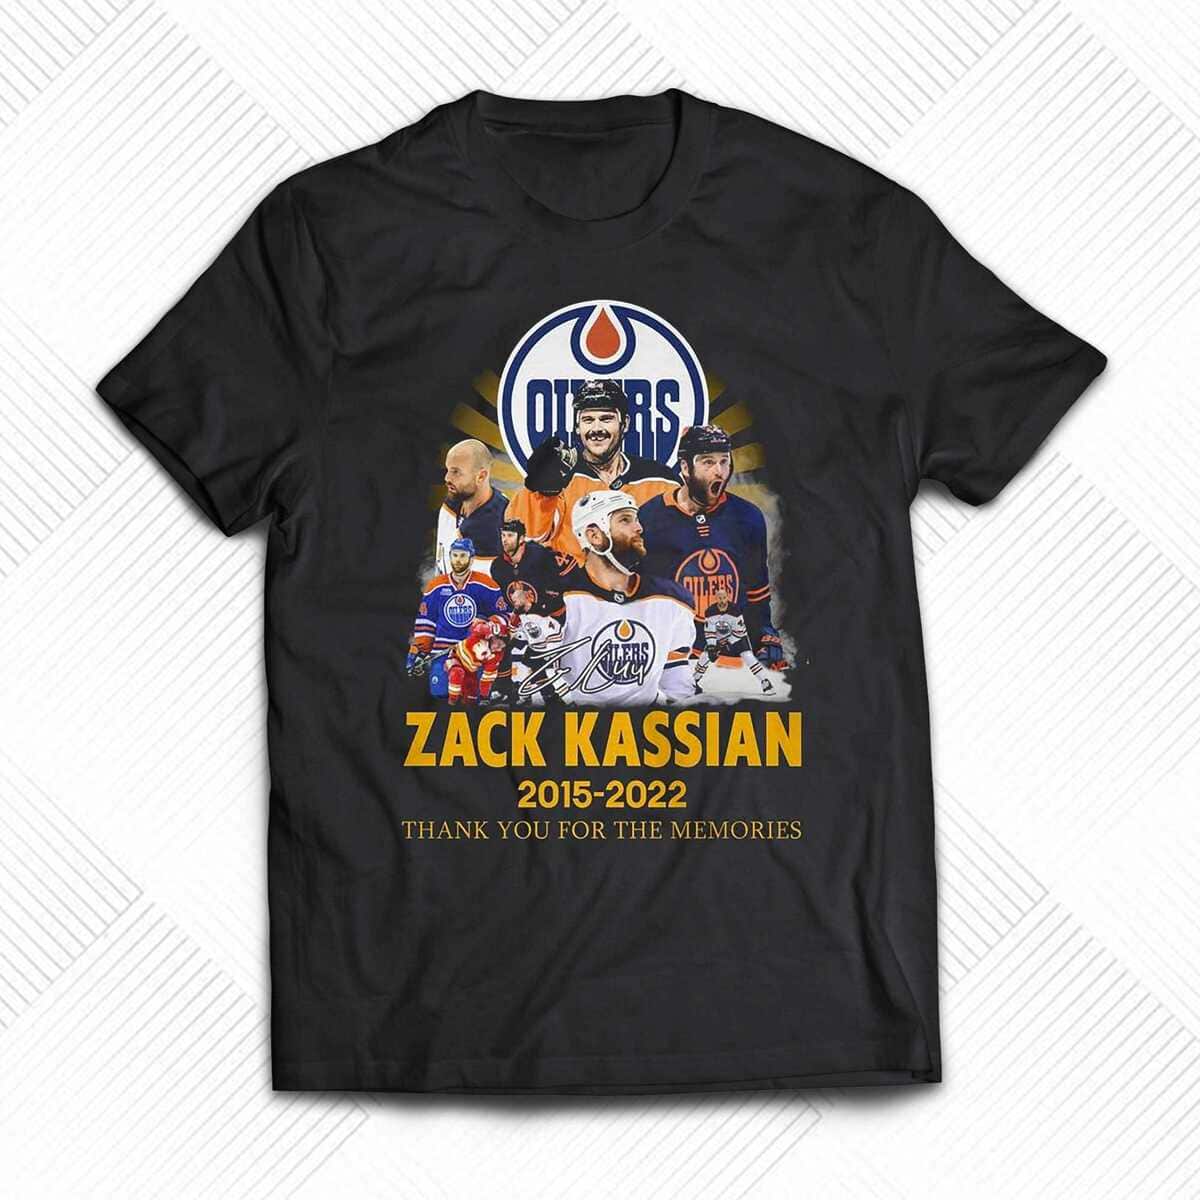 Zack Kassian T-Shirt Thank You For The Memories